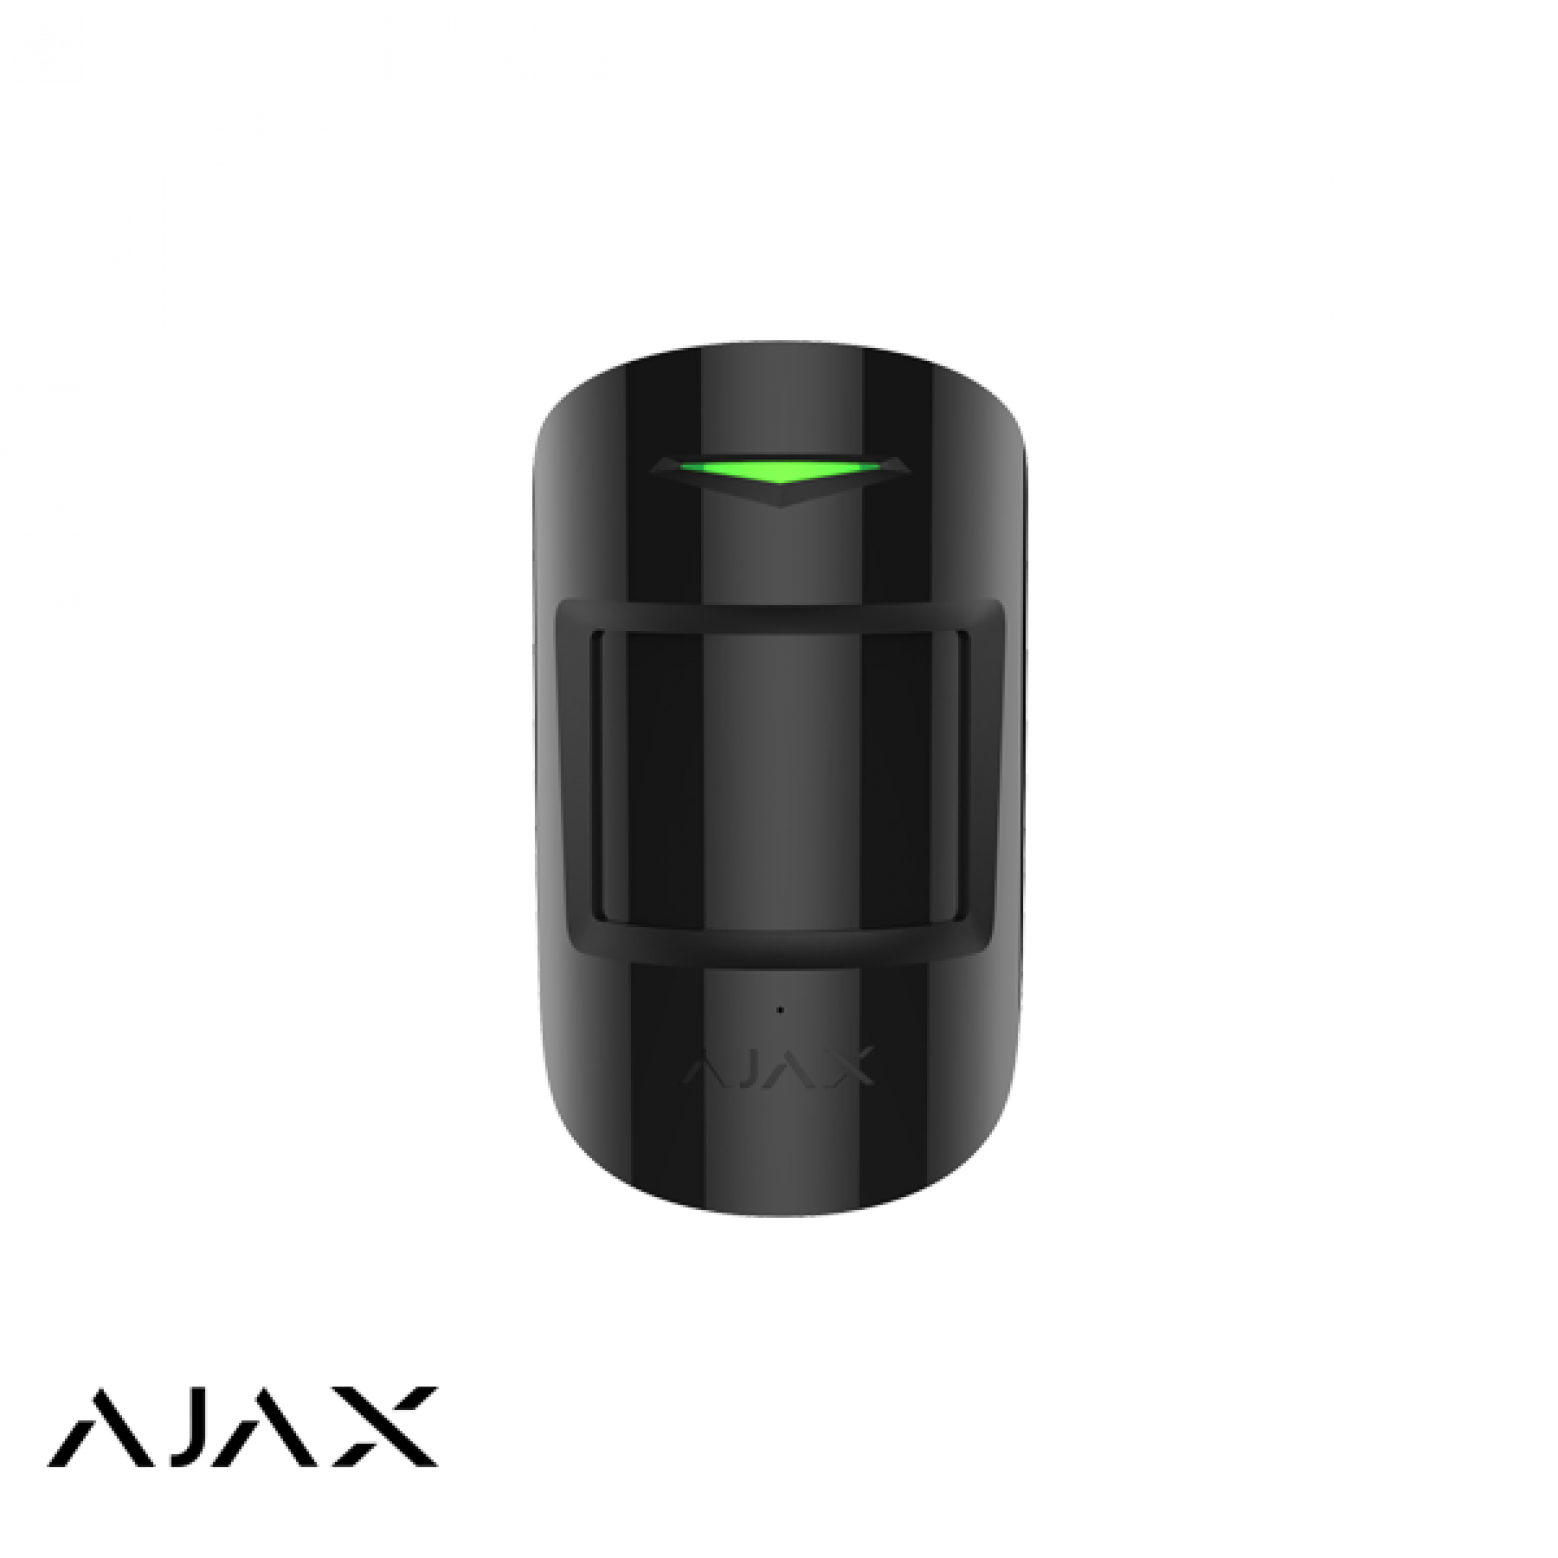 AJAX MotionProtect plus motion detector pet friendly wireless